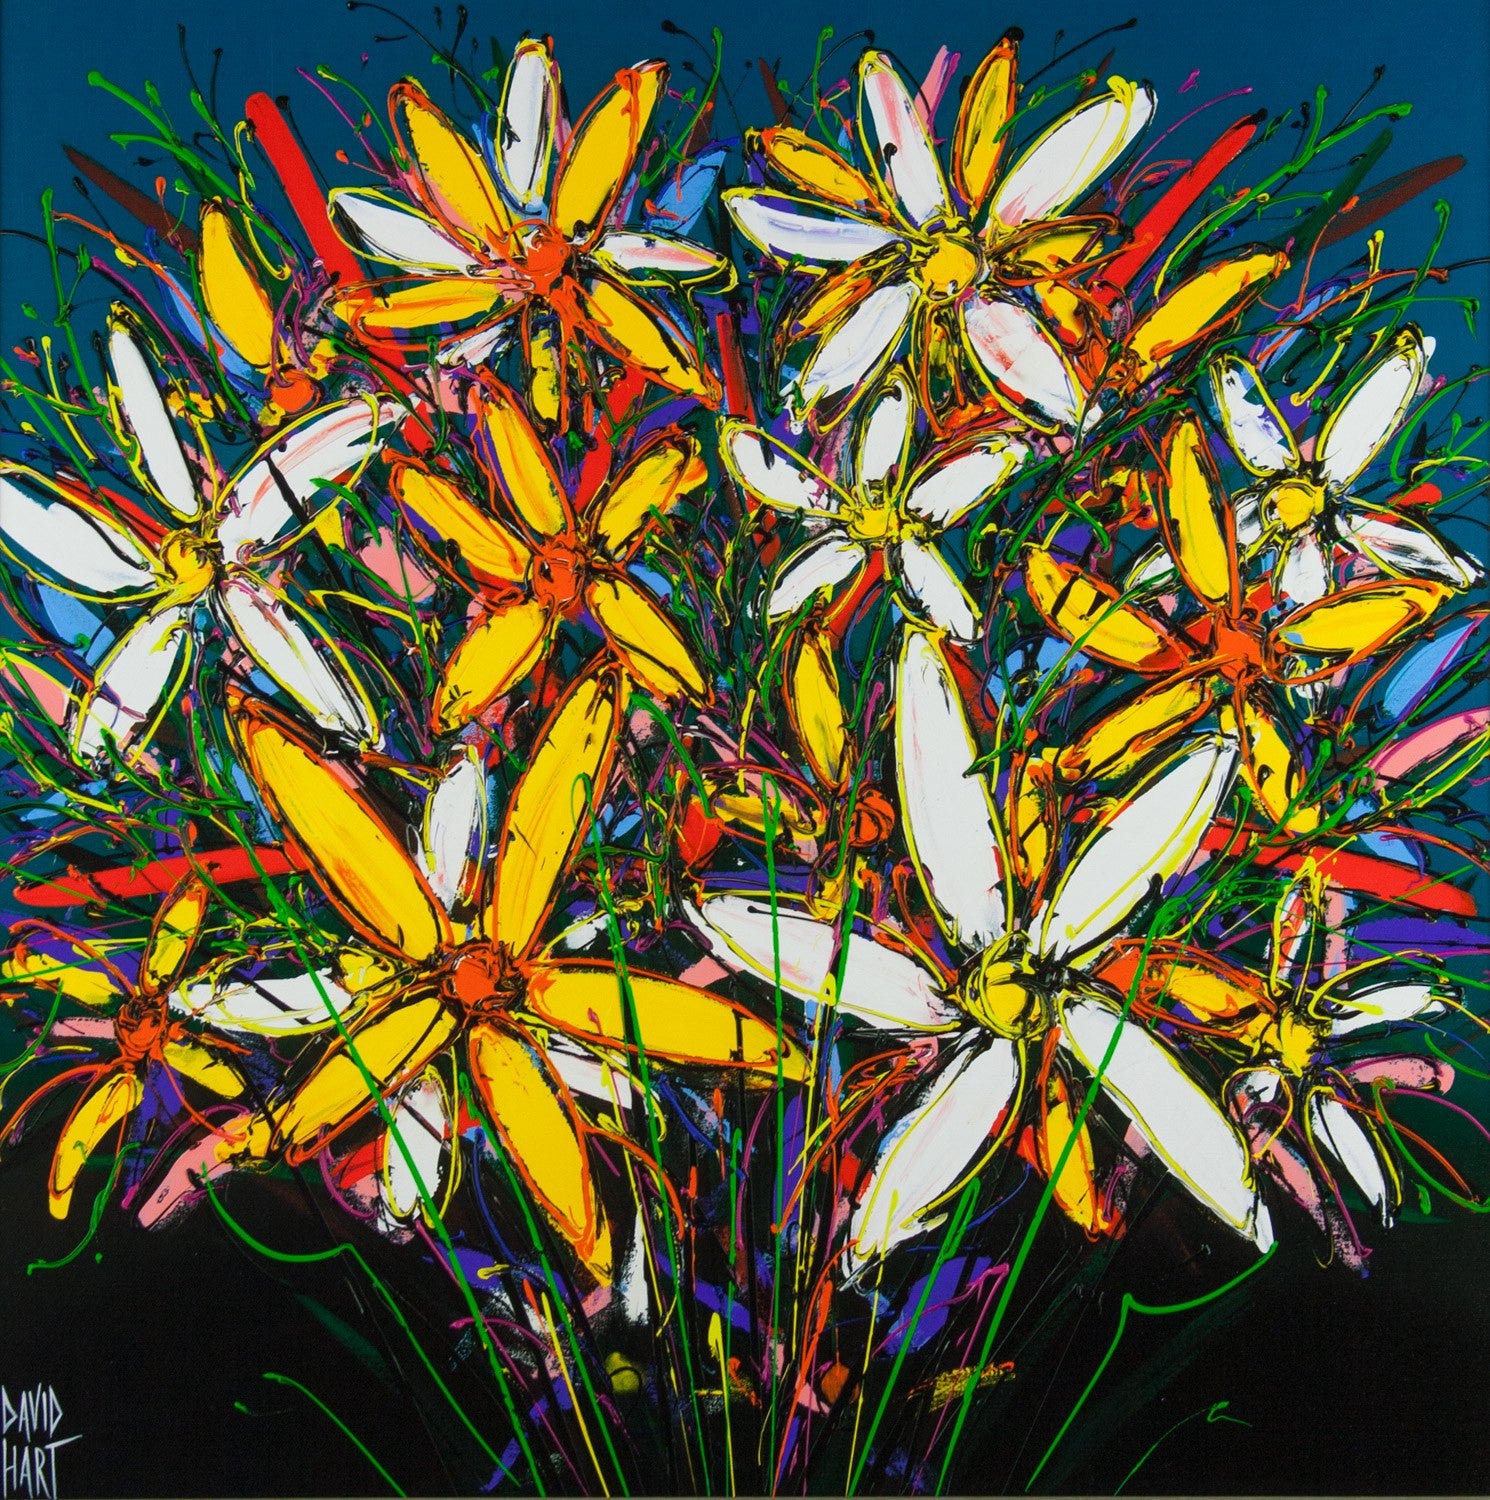 David Hart 'Wild Flowers' - Fine Art reproduction on canvas